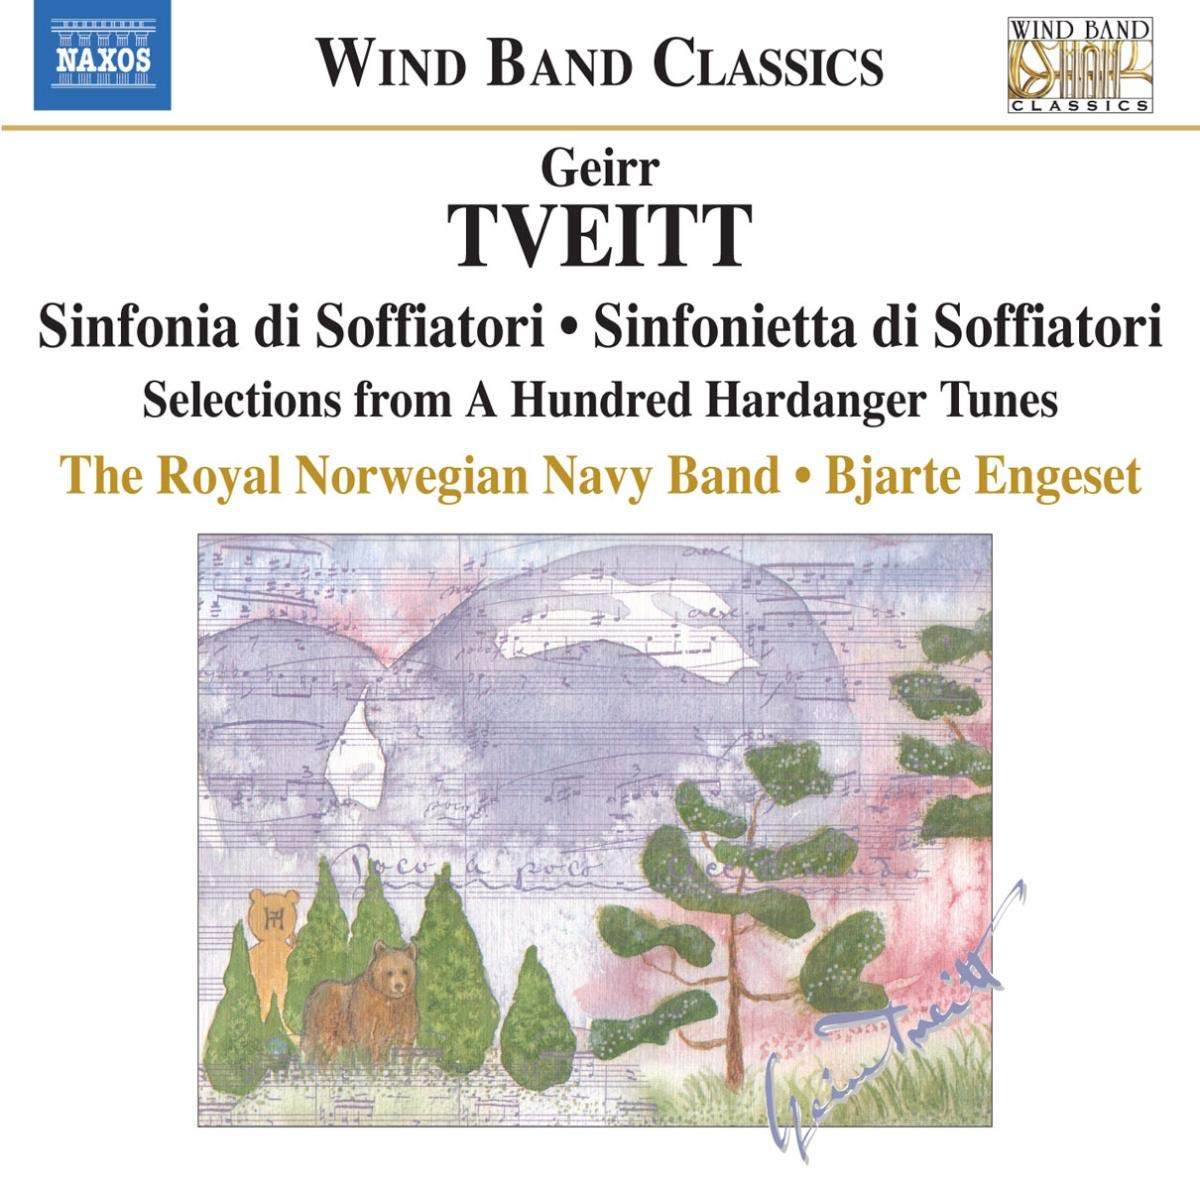 TVEITT: Music for wind instruments